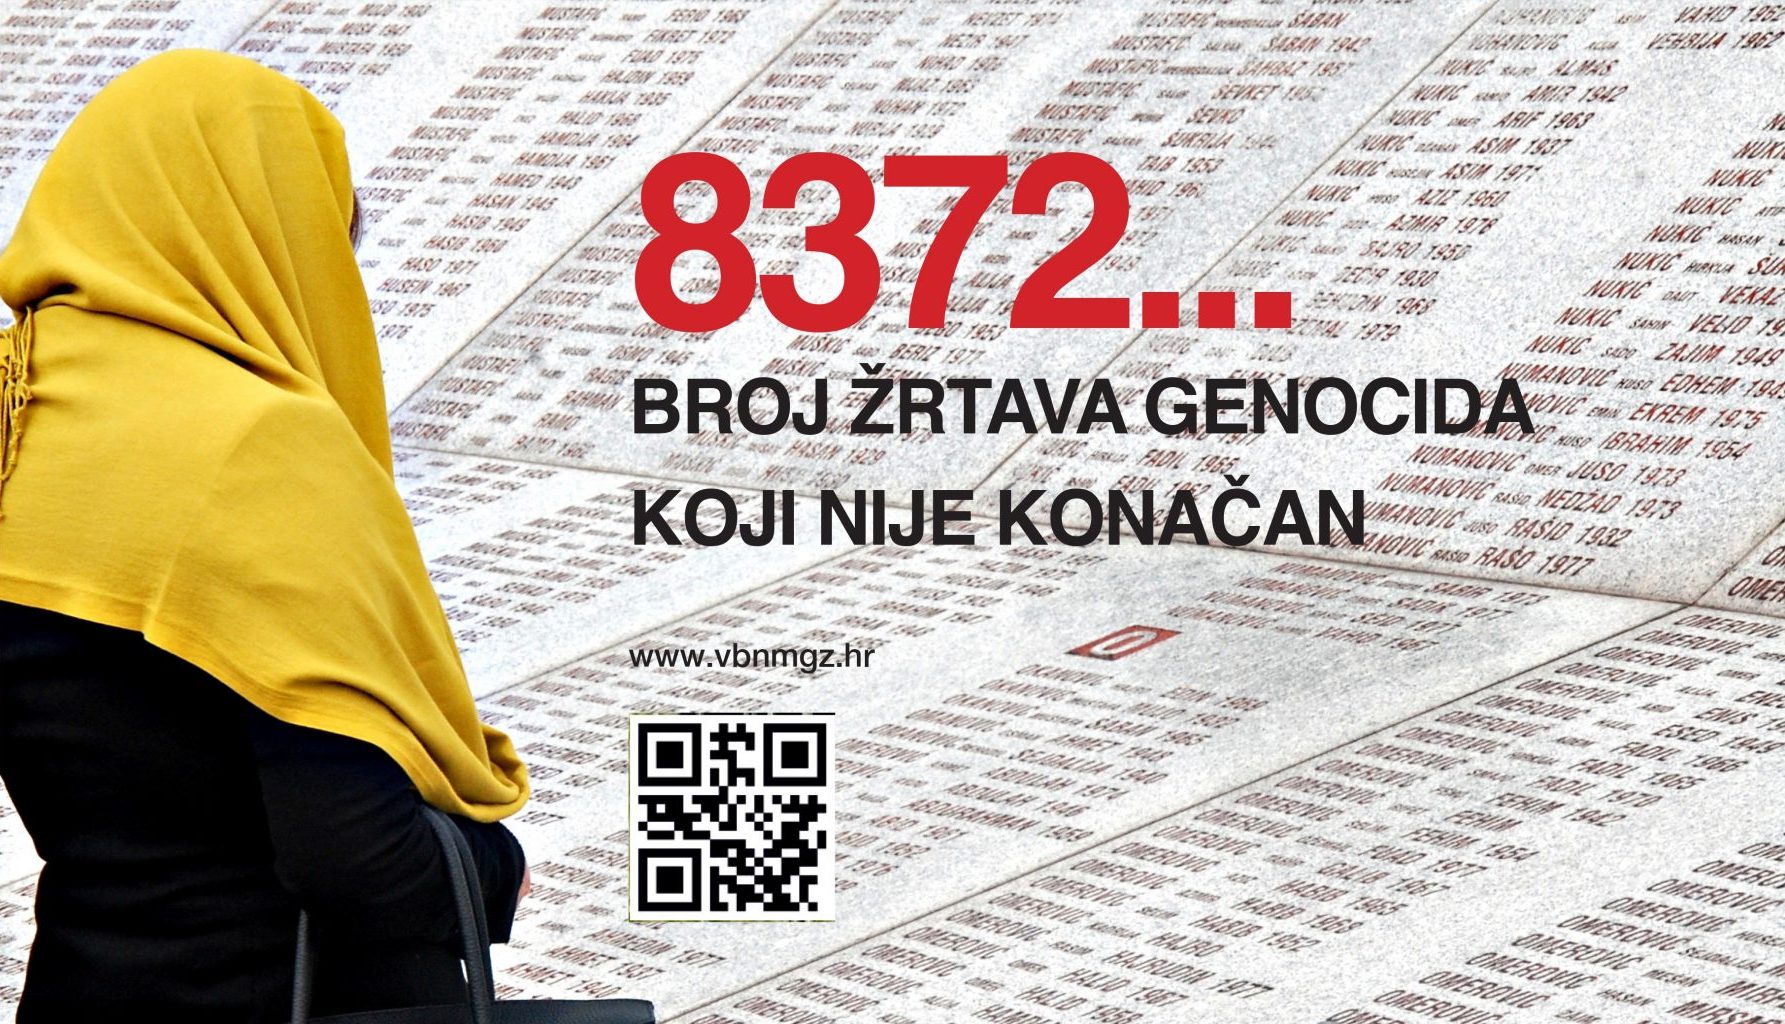 SREBRENICA 1995-2022: XVI. konvoj mladih Bošnjaka RH i njihovih prijatelja „DA SE NIKAD NE ZABORAVI“ i nagradni natječaj za najbolji literarni rad/esej i kratki videozapis na teme inspirirane tragedijom Srebrenice